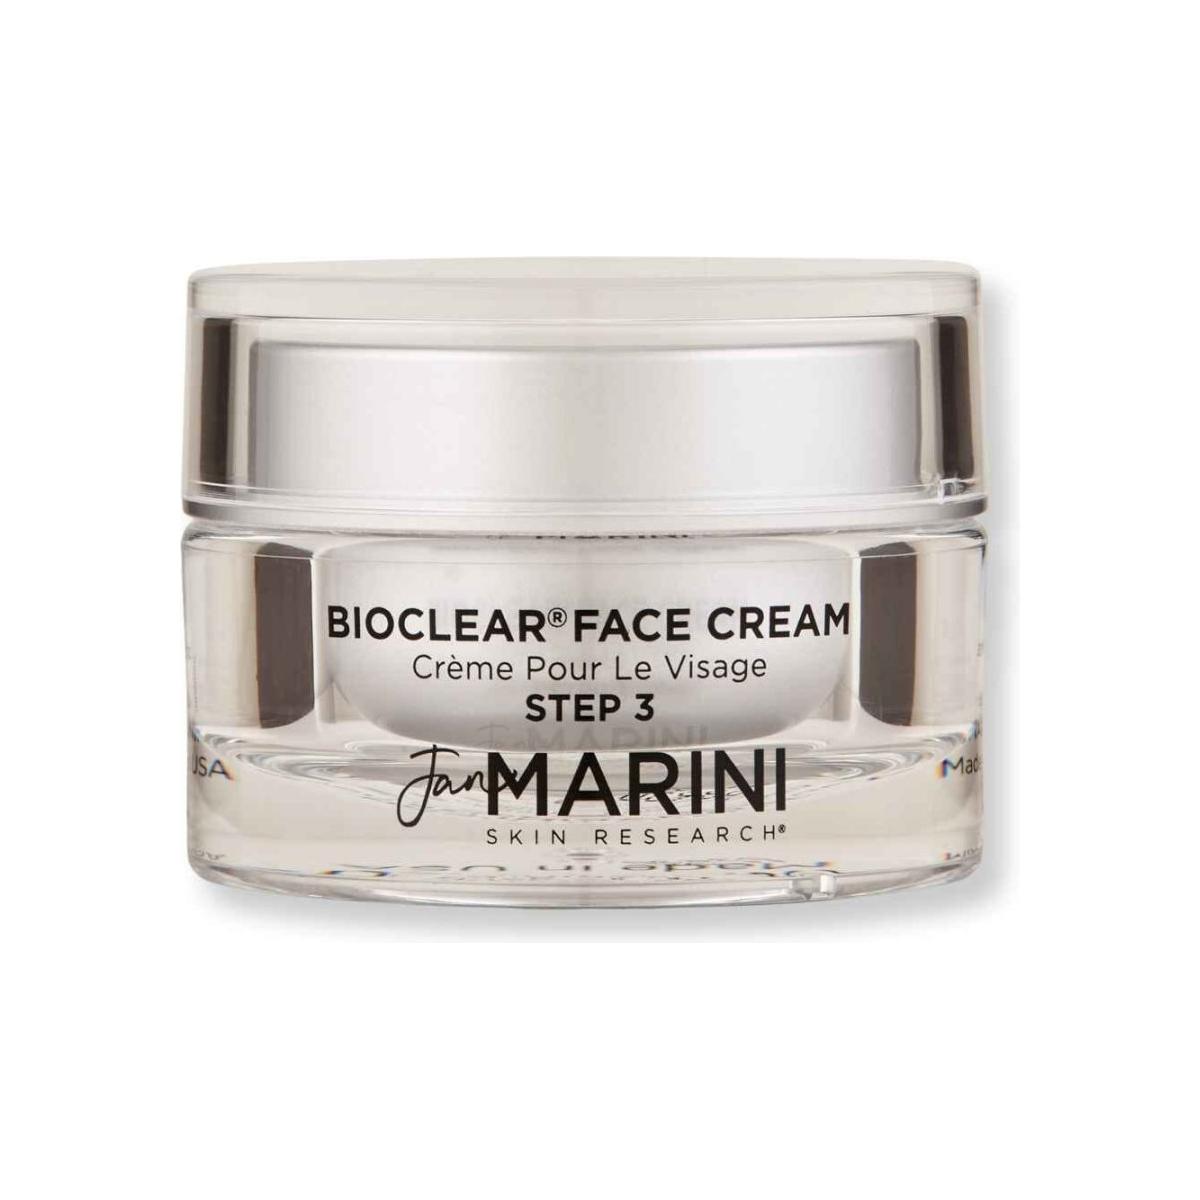 Jan Marini Bioclear Face Cream 1 oz30 ml - Glam Global UK